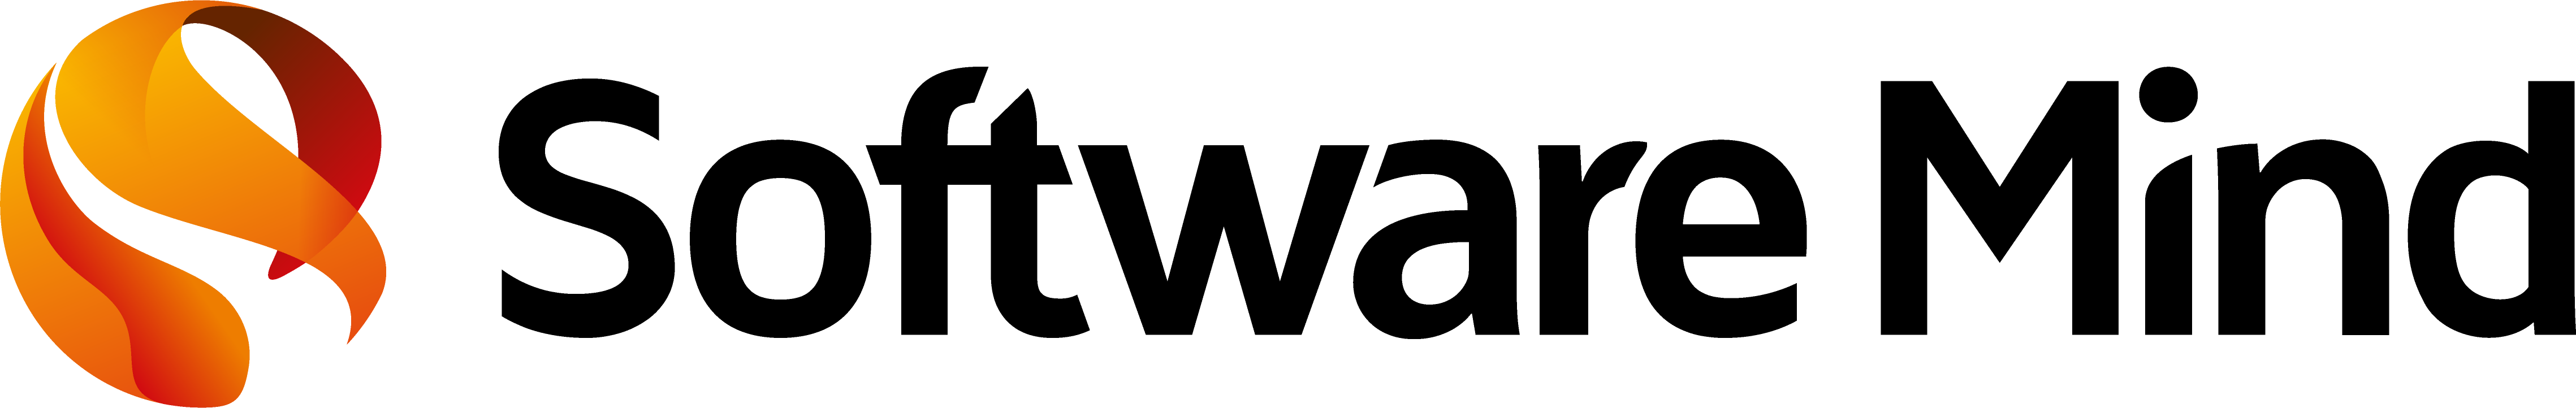 https://softwaremind.com logo